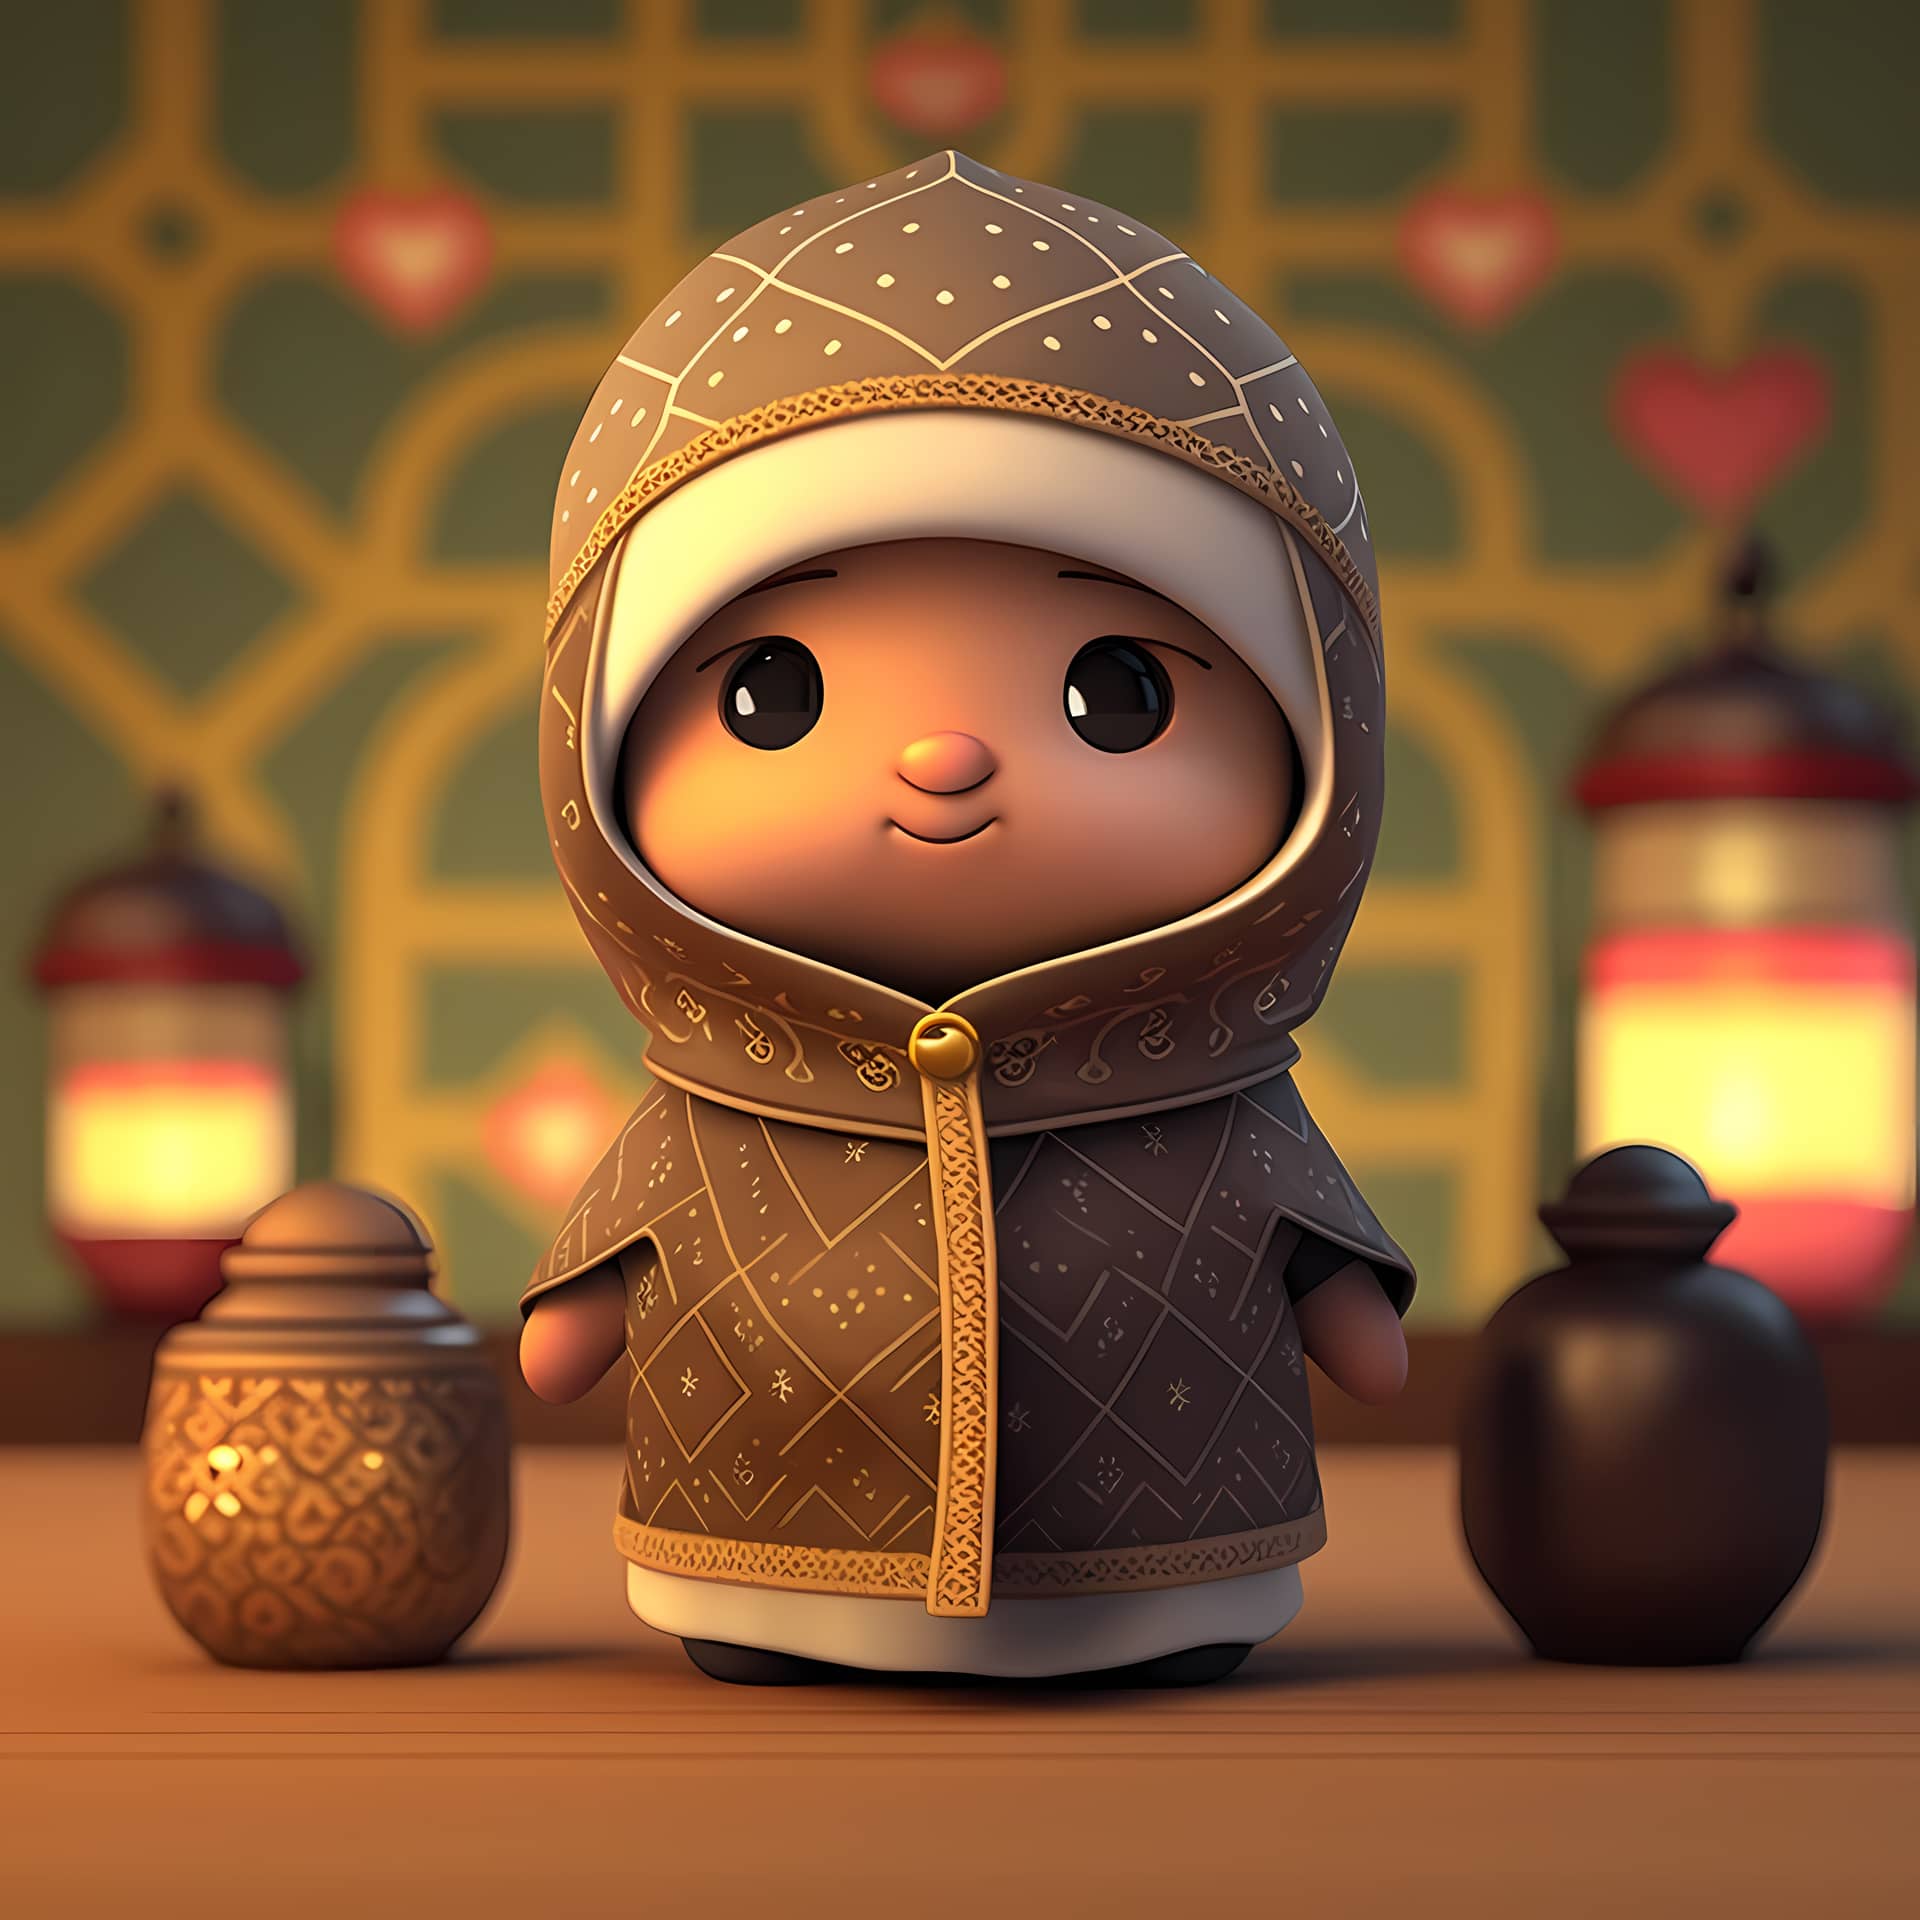 Adorable cute muslim children cartoon character 3d rendering moody image